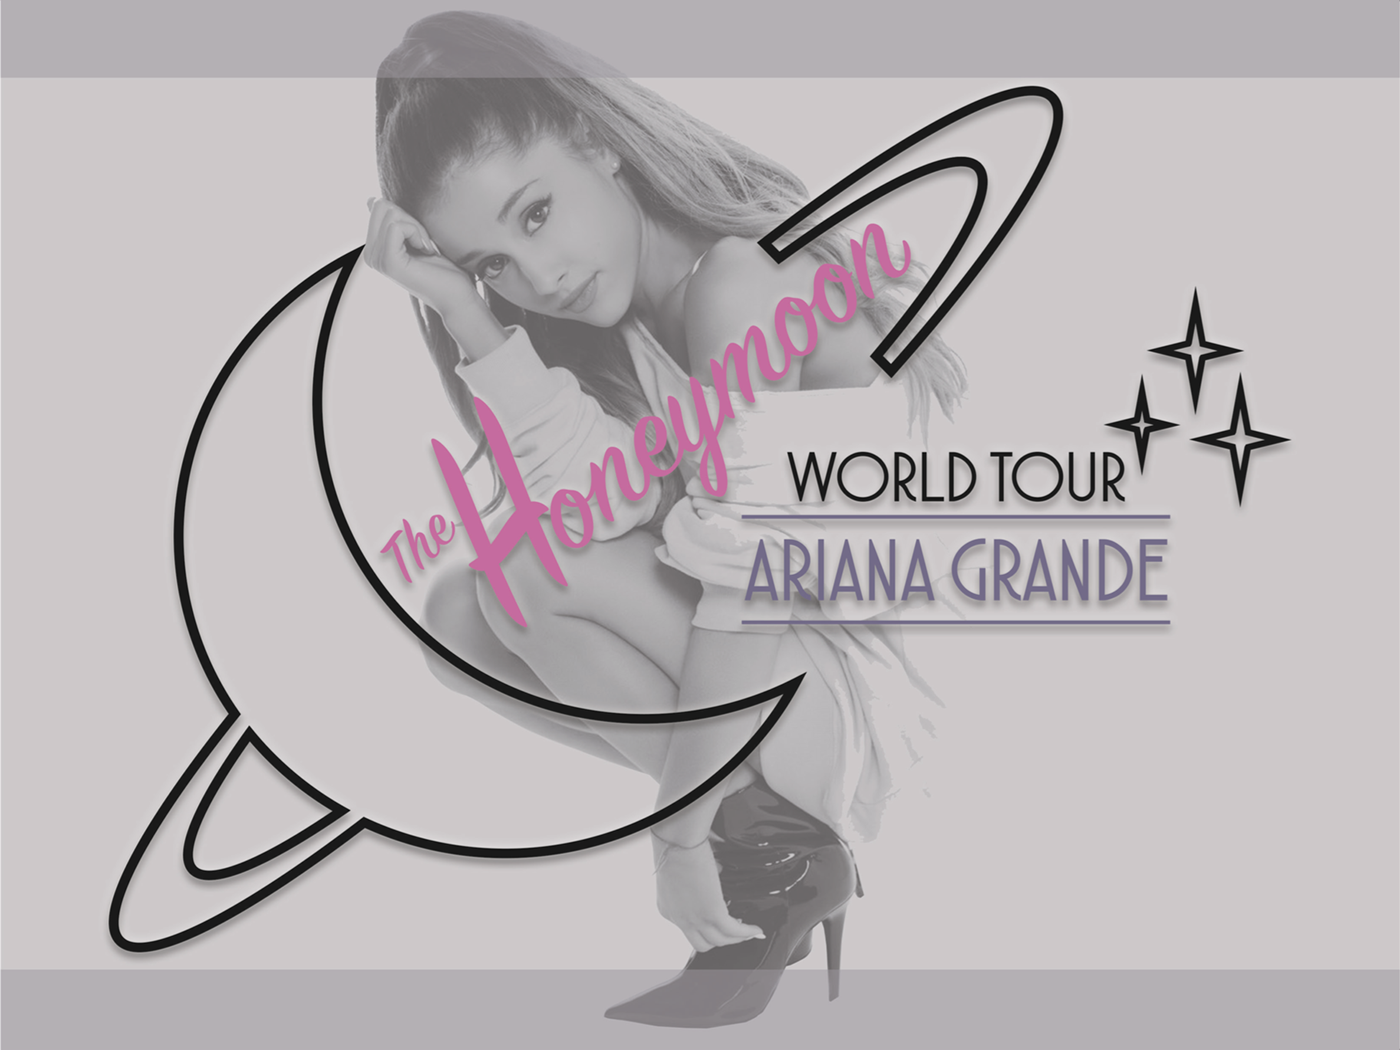 Sketch up set design  Ariana Grande concert honeymoon photoshoot